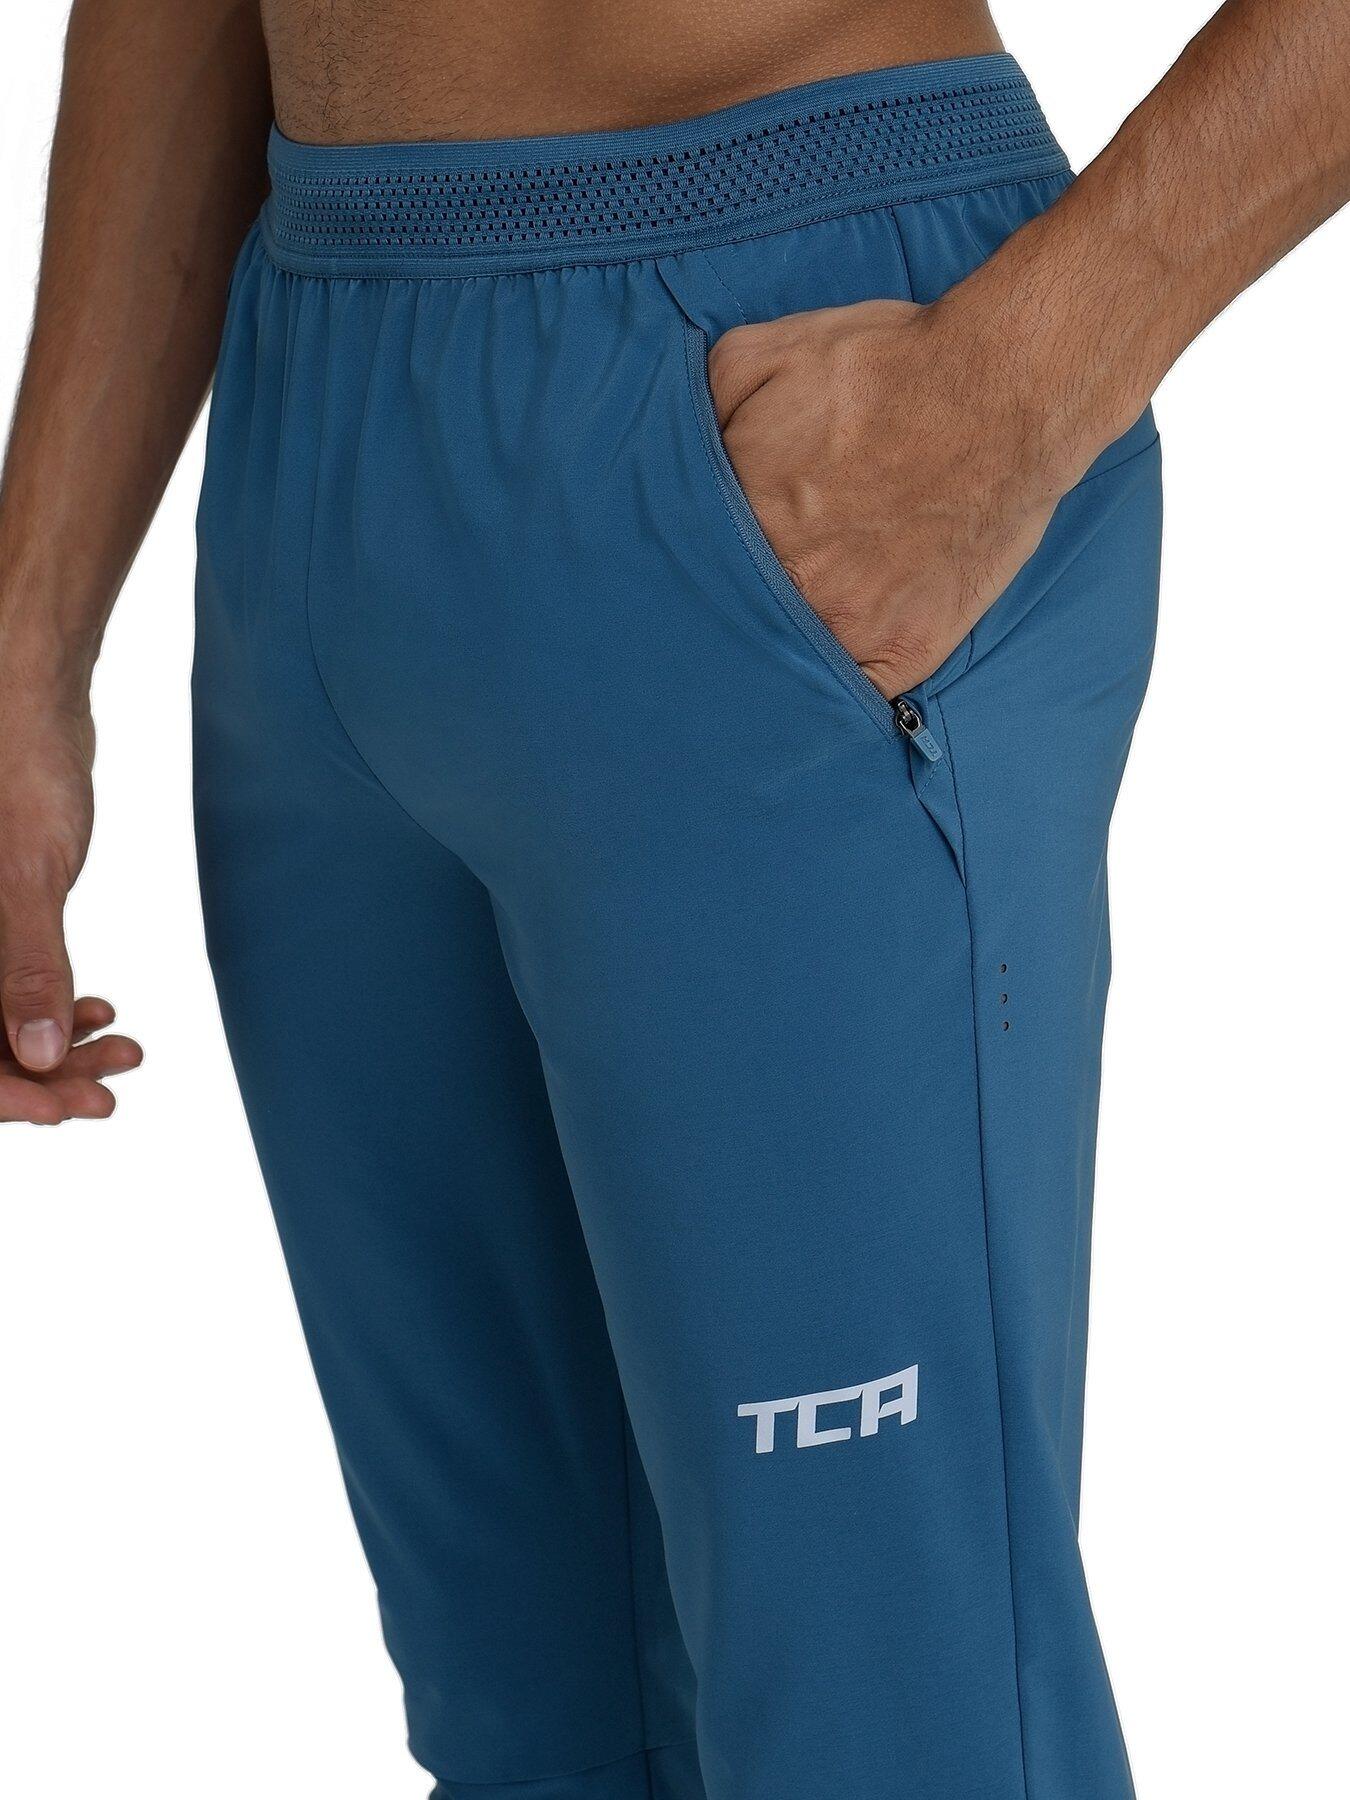 Men's Sprint Running Trouser with Zip Pockets - Iron Blue 4/5